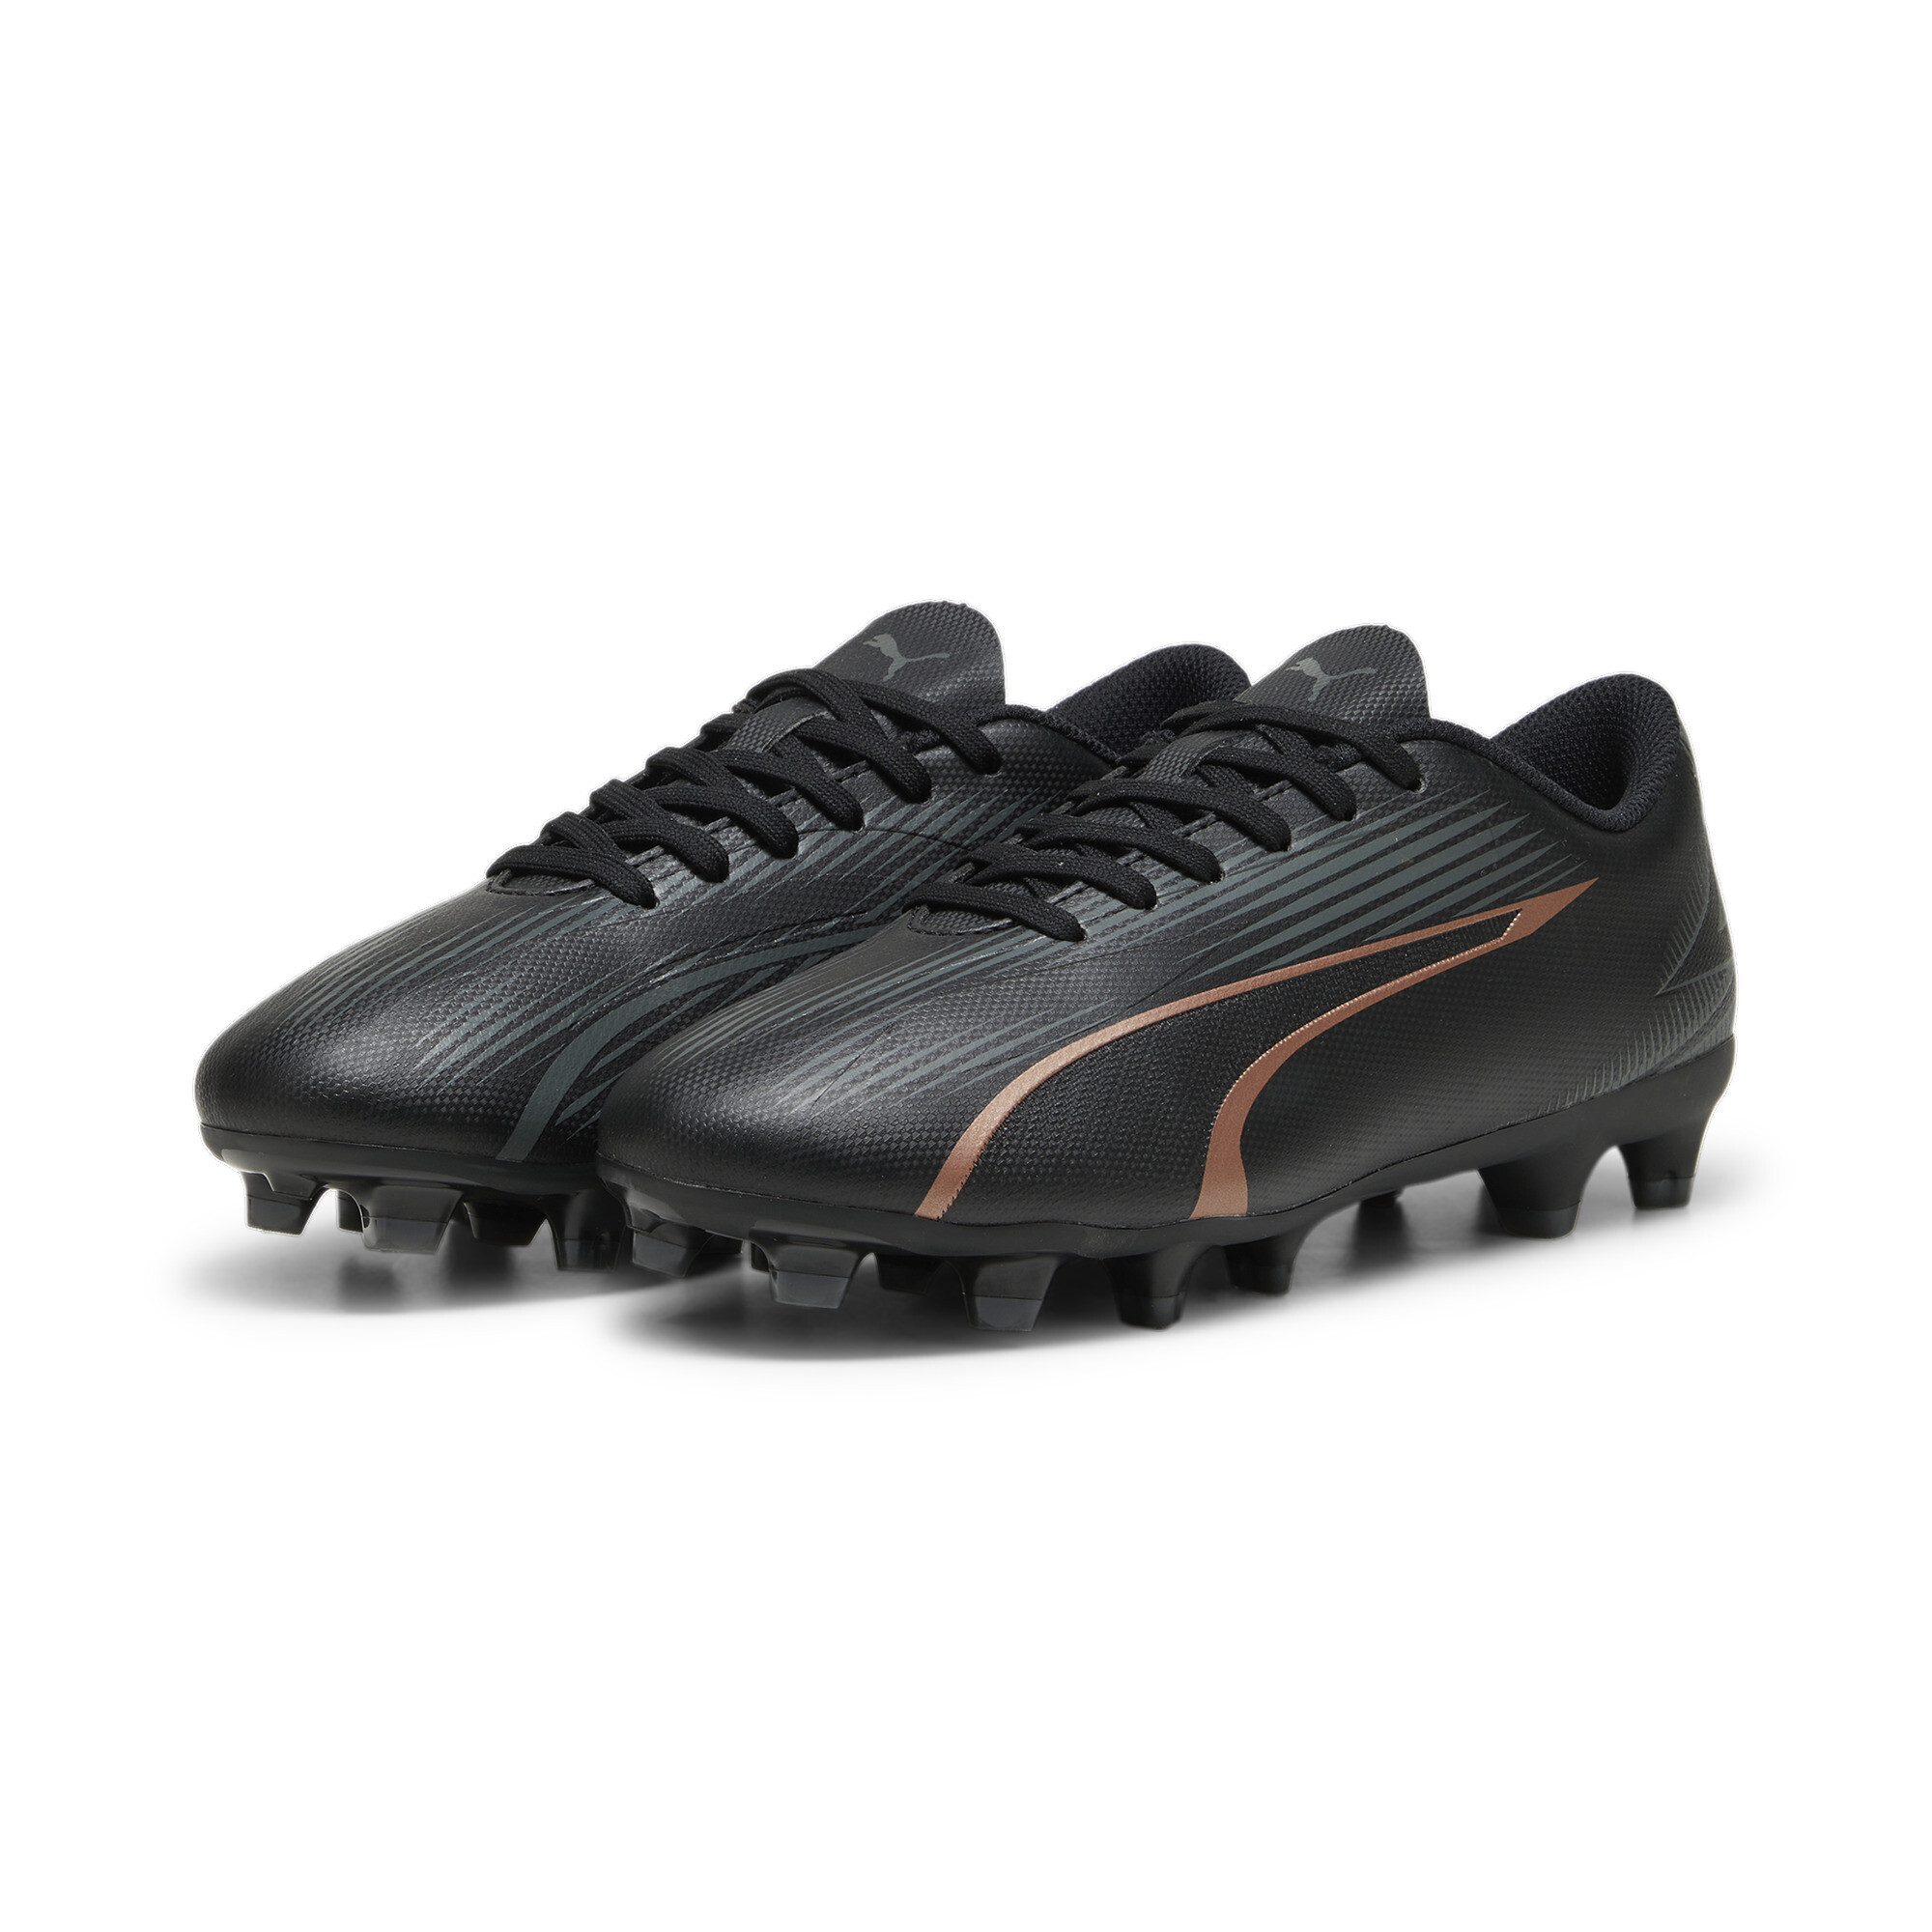 PUMA ULTRA PLAY FG/AG Youth Football Boots In Black, Size EU 35